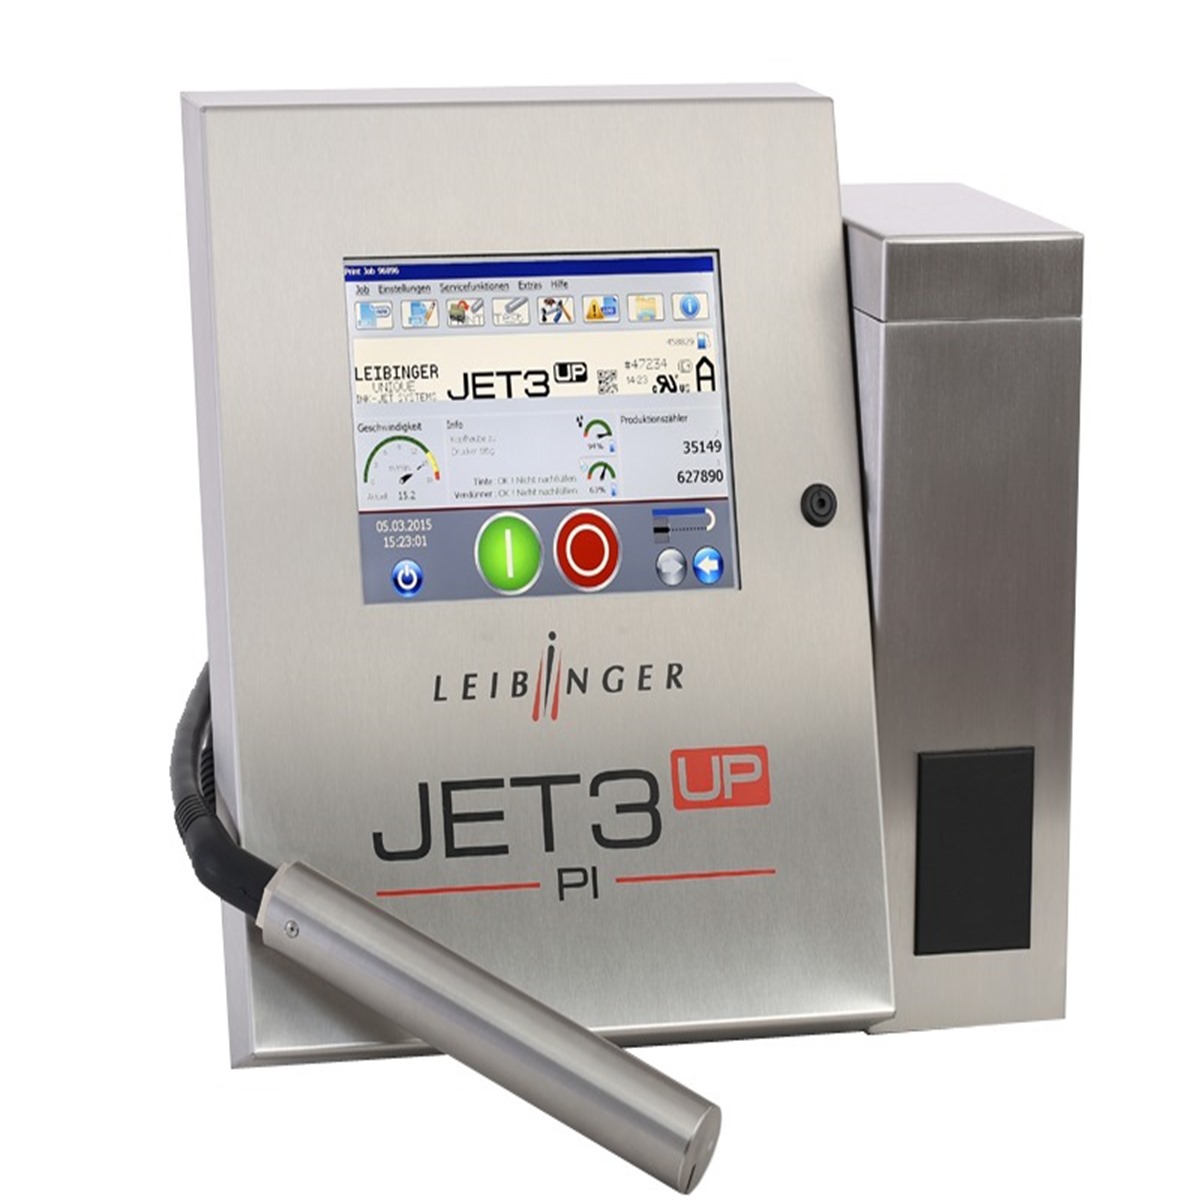 Jet3Up PI industrial continuous inkjet printer